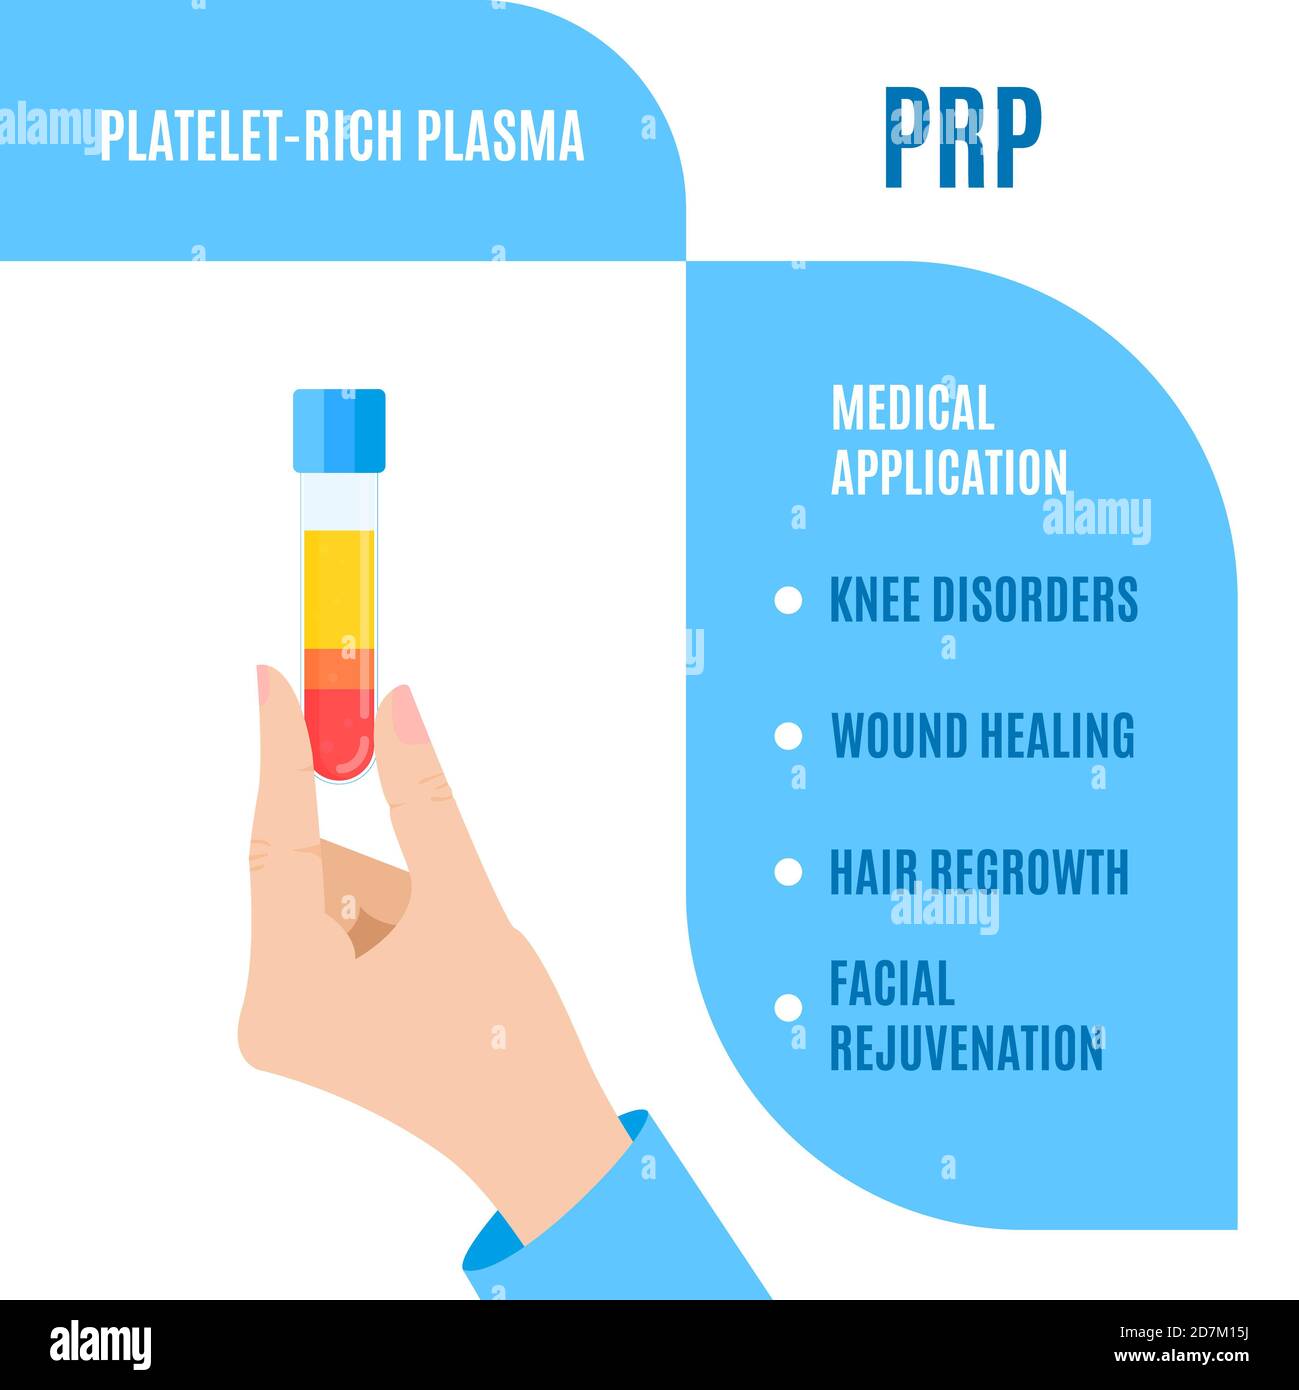 Platelet rich plasma (PRP) medical use, illustration Stock Photo